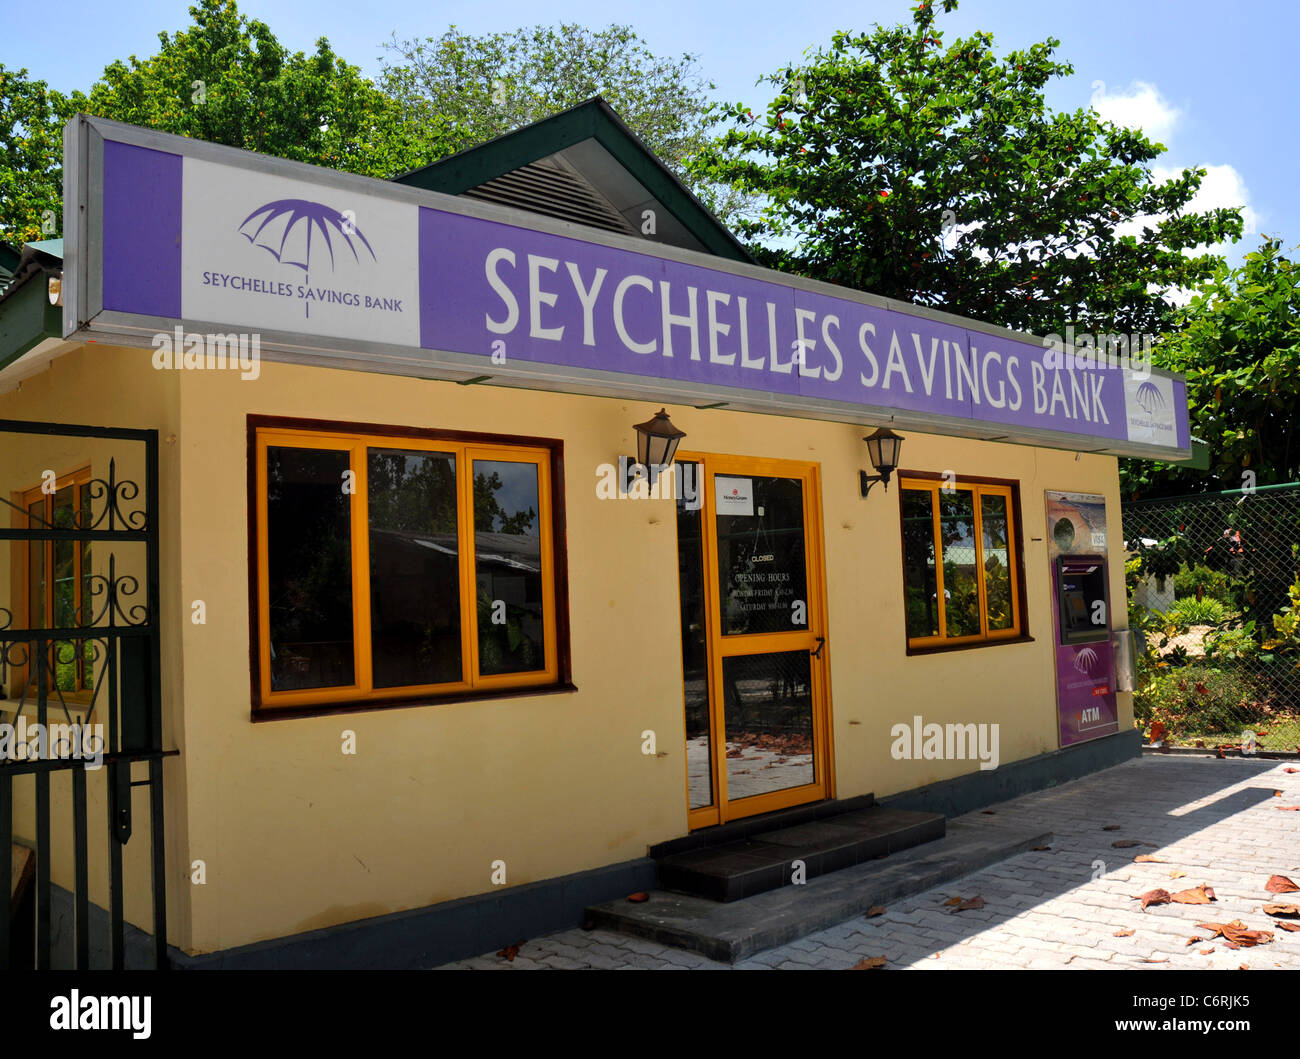 https://c8.alamy.com/comp/C6RJK5/seychelles-savings-bank-branch-la-digue-island-seychelles-C6RJK5.jpg